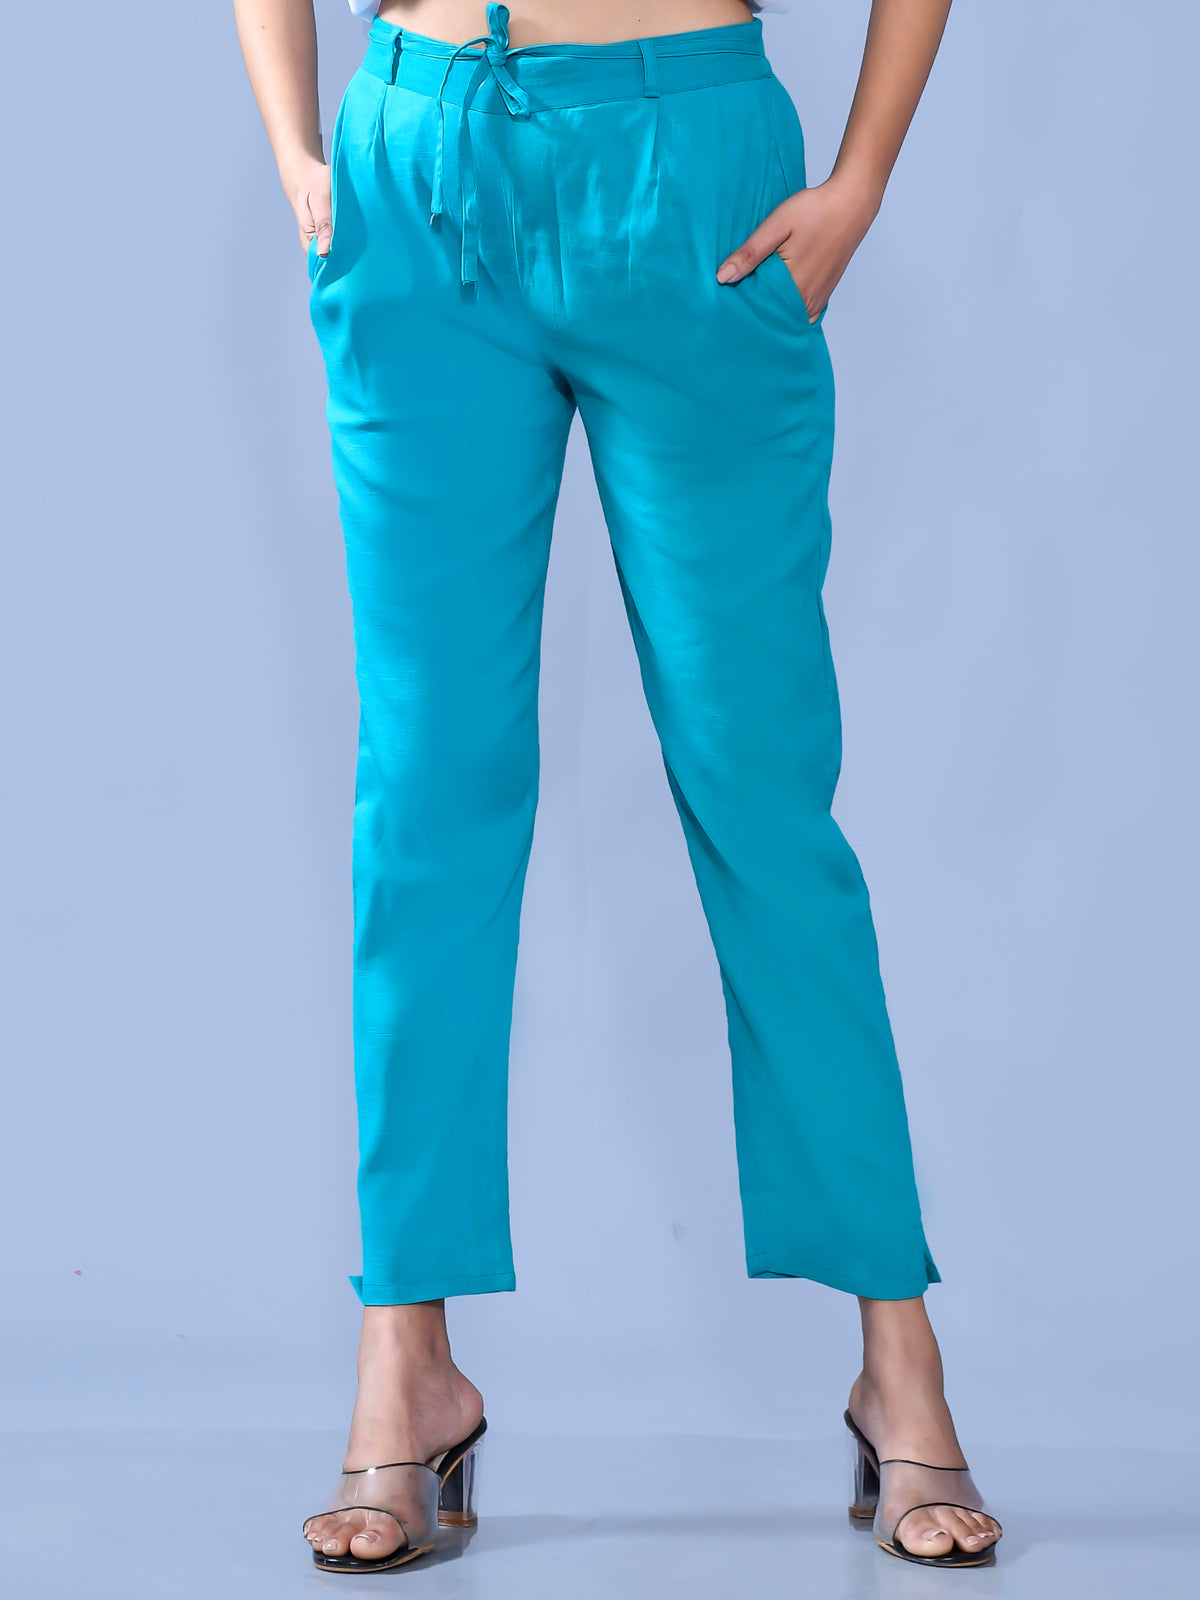 Pack Of 2 Womens Regular Fit Grey And Blue Cotton Slub Belt Pant Combo